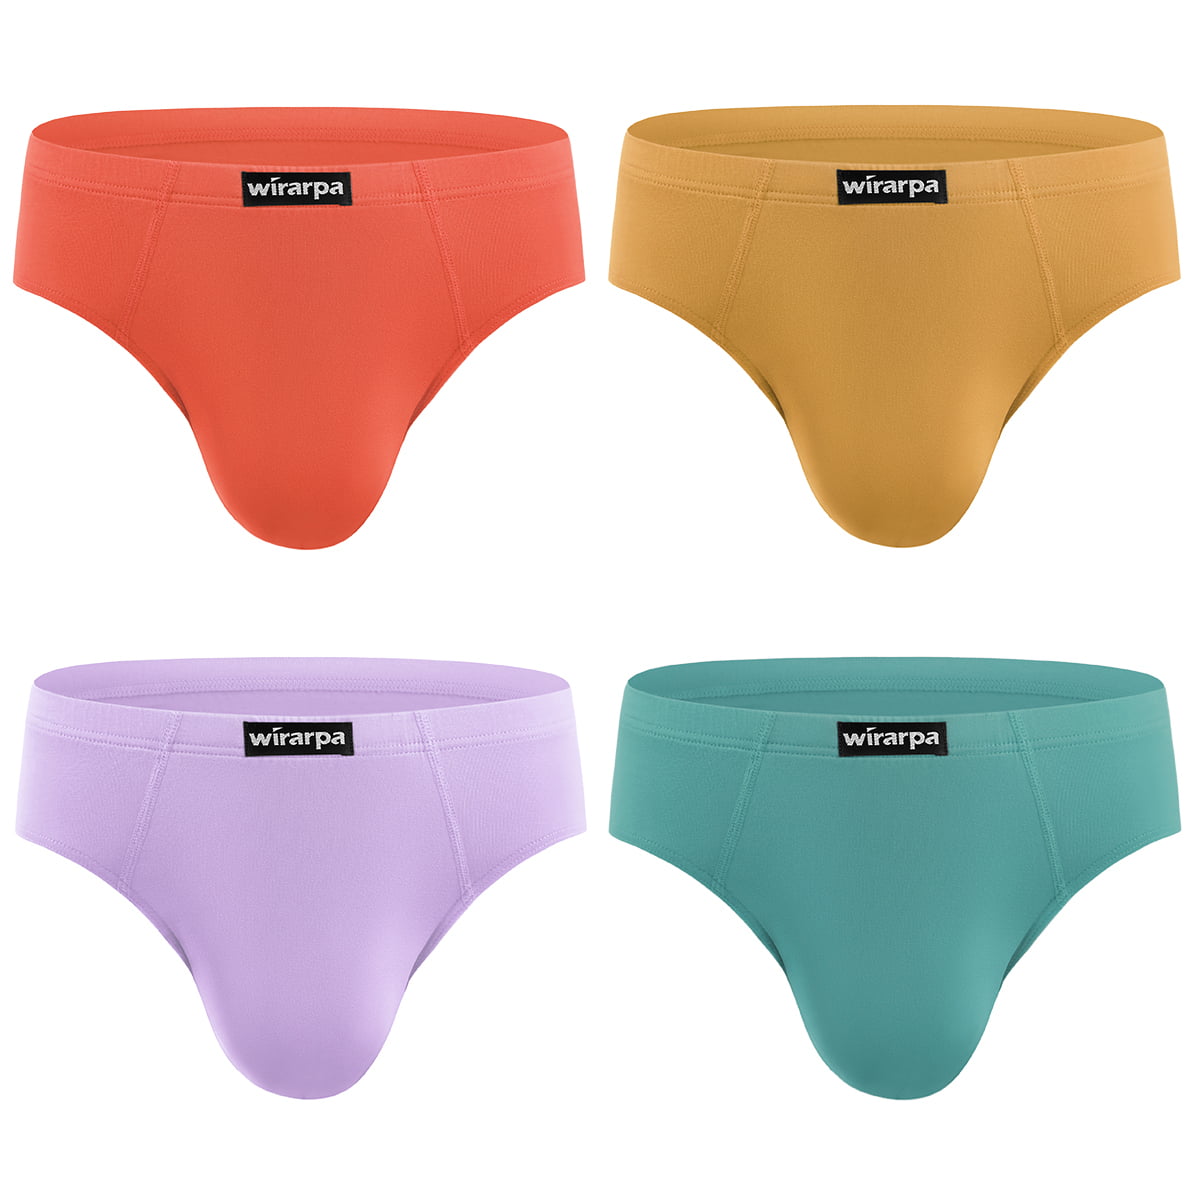 wirarpa Men's Underwear Modal Microfiber Briefs India